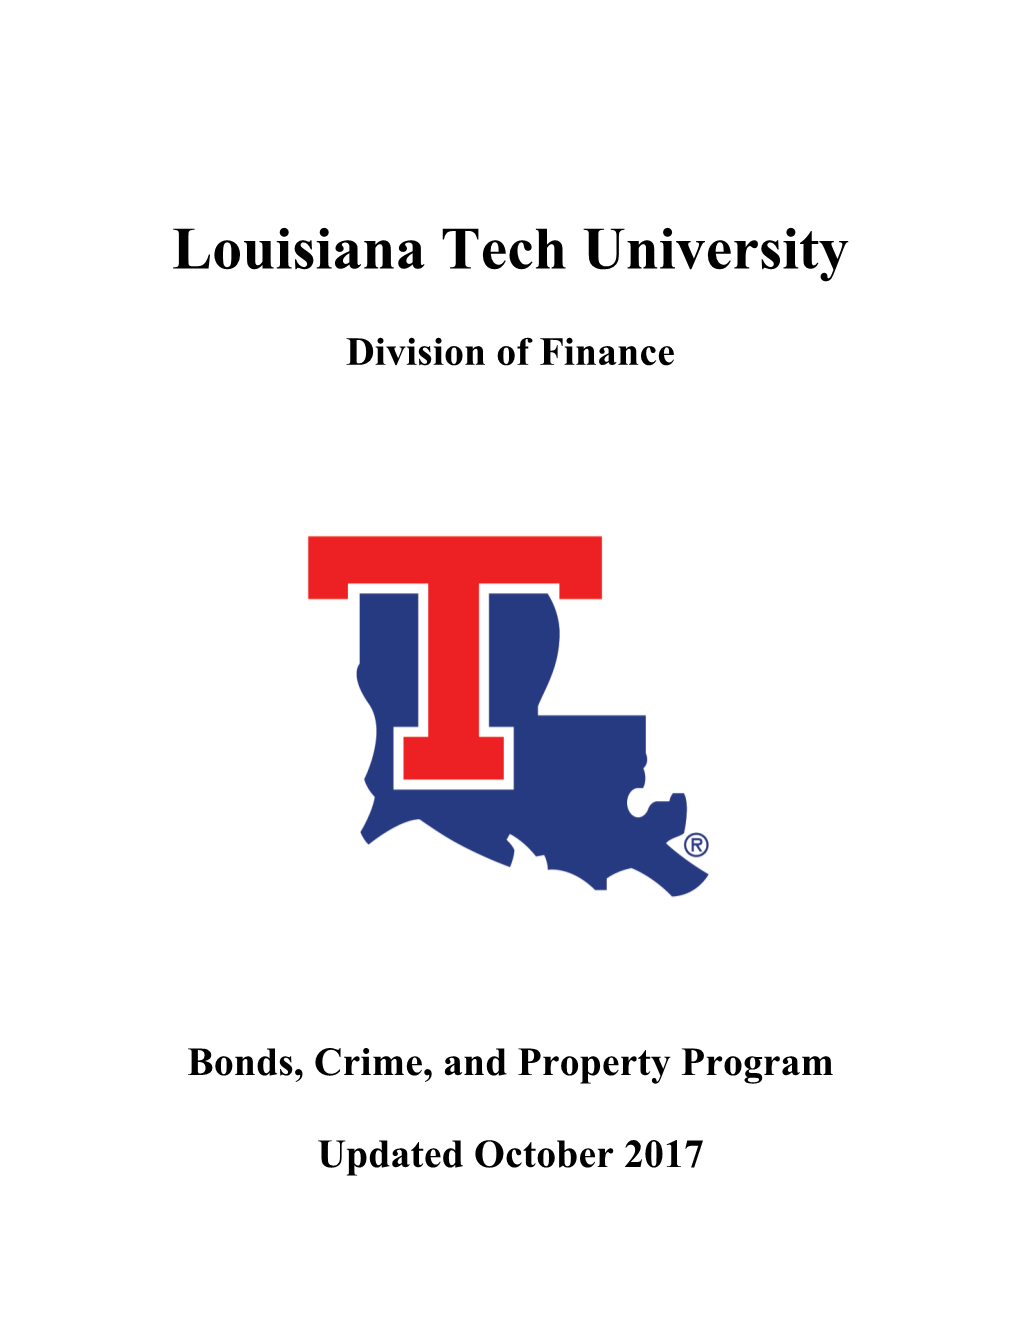 Louisiana Tech University Bonds, Crime, and Property Program